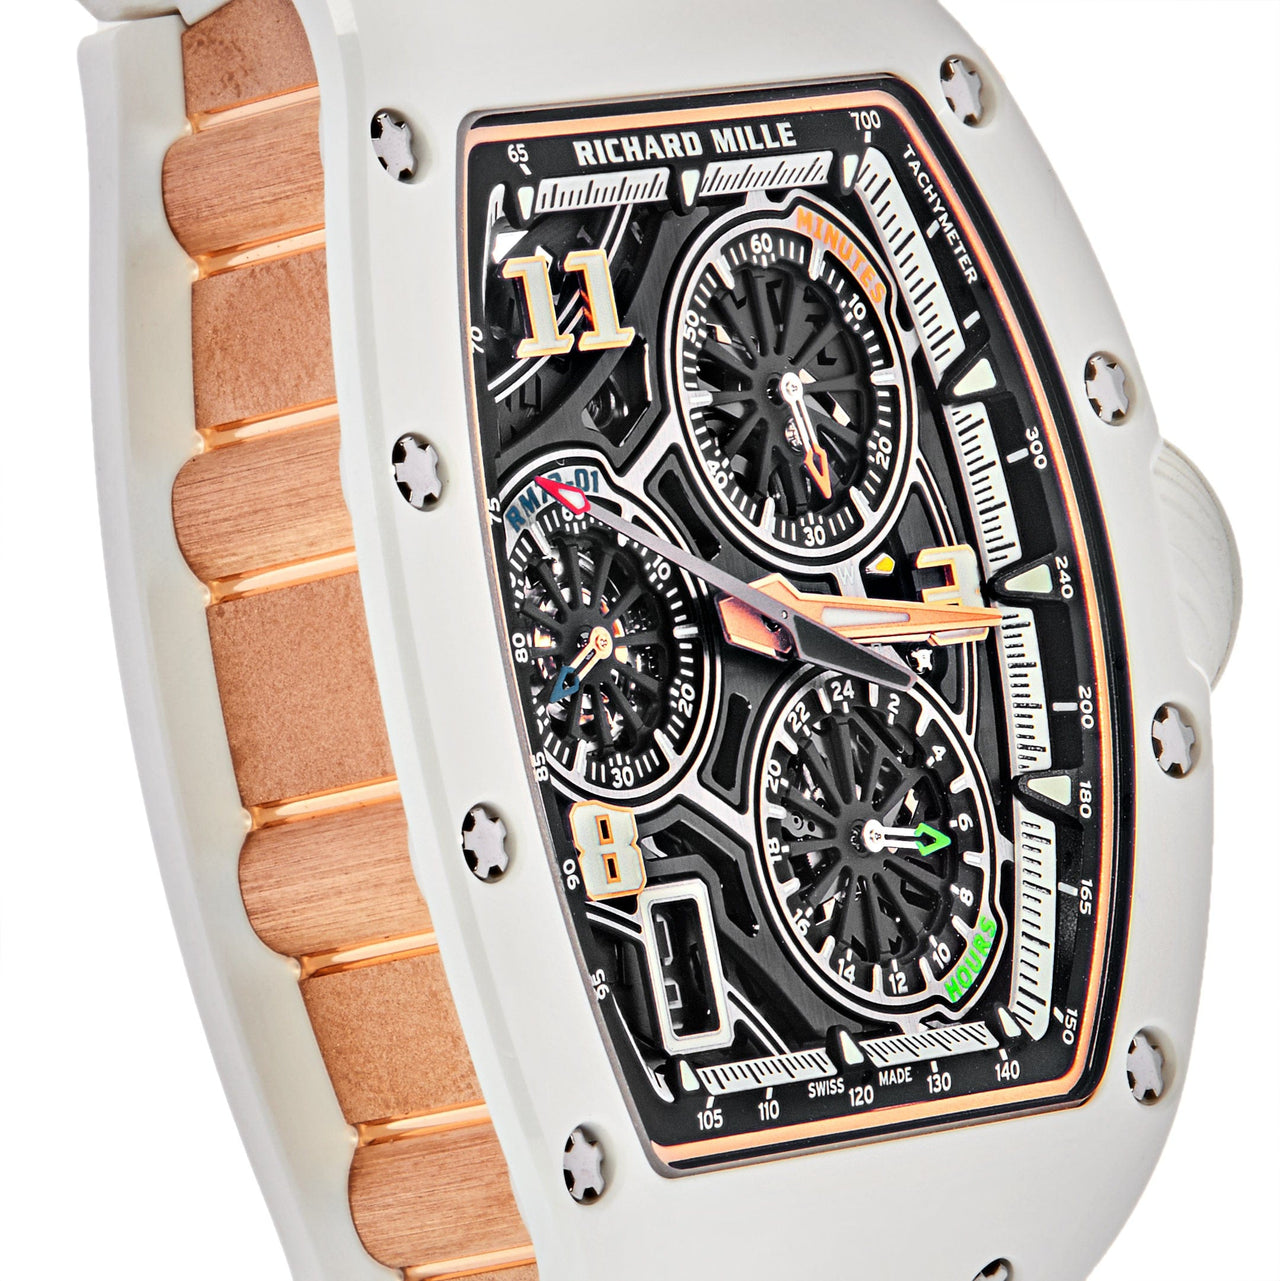 Luxury Watch Richard Mille Lifestyle In-House Chronograph White Ceramic RM72-01 Wrist Aficionado